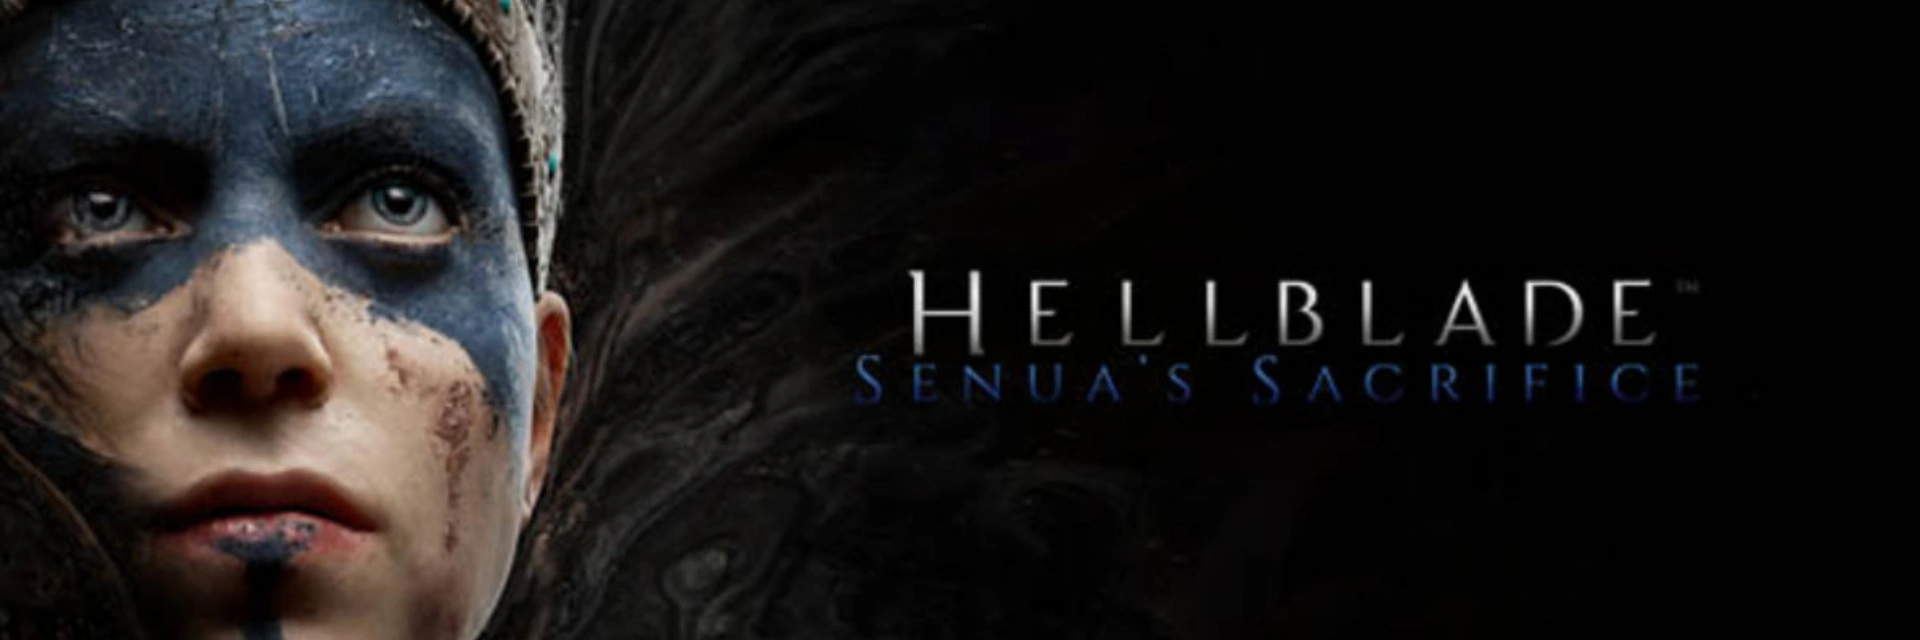 Hellblade.Senuas.Sacrifice.banner1